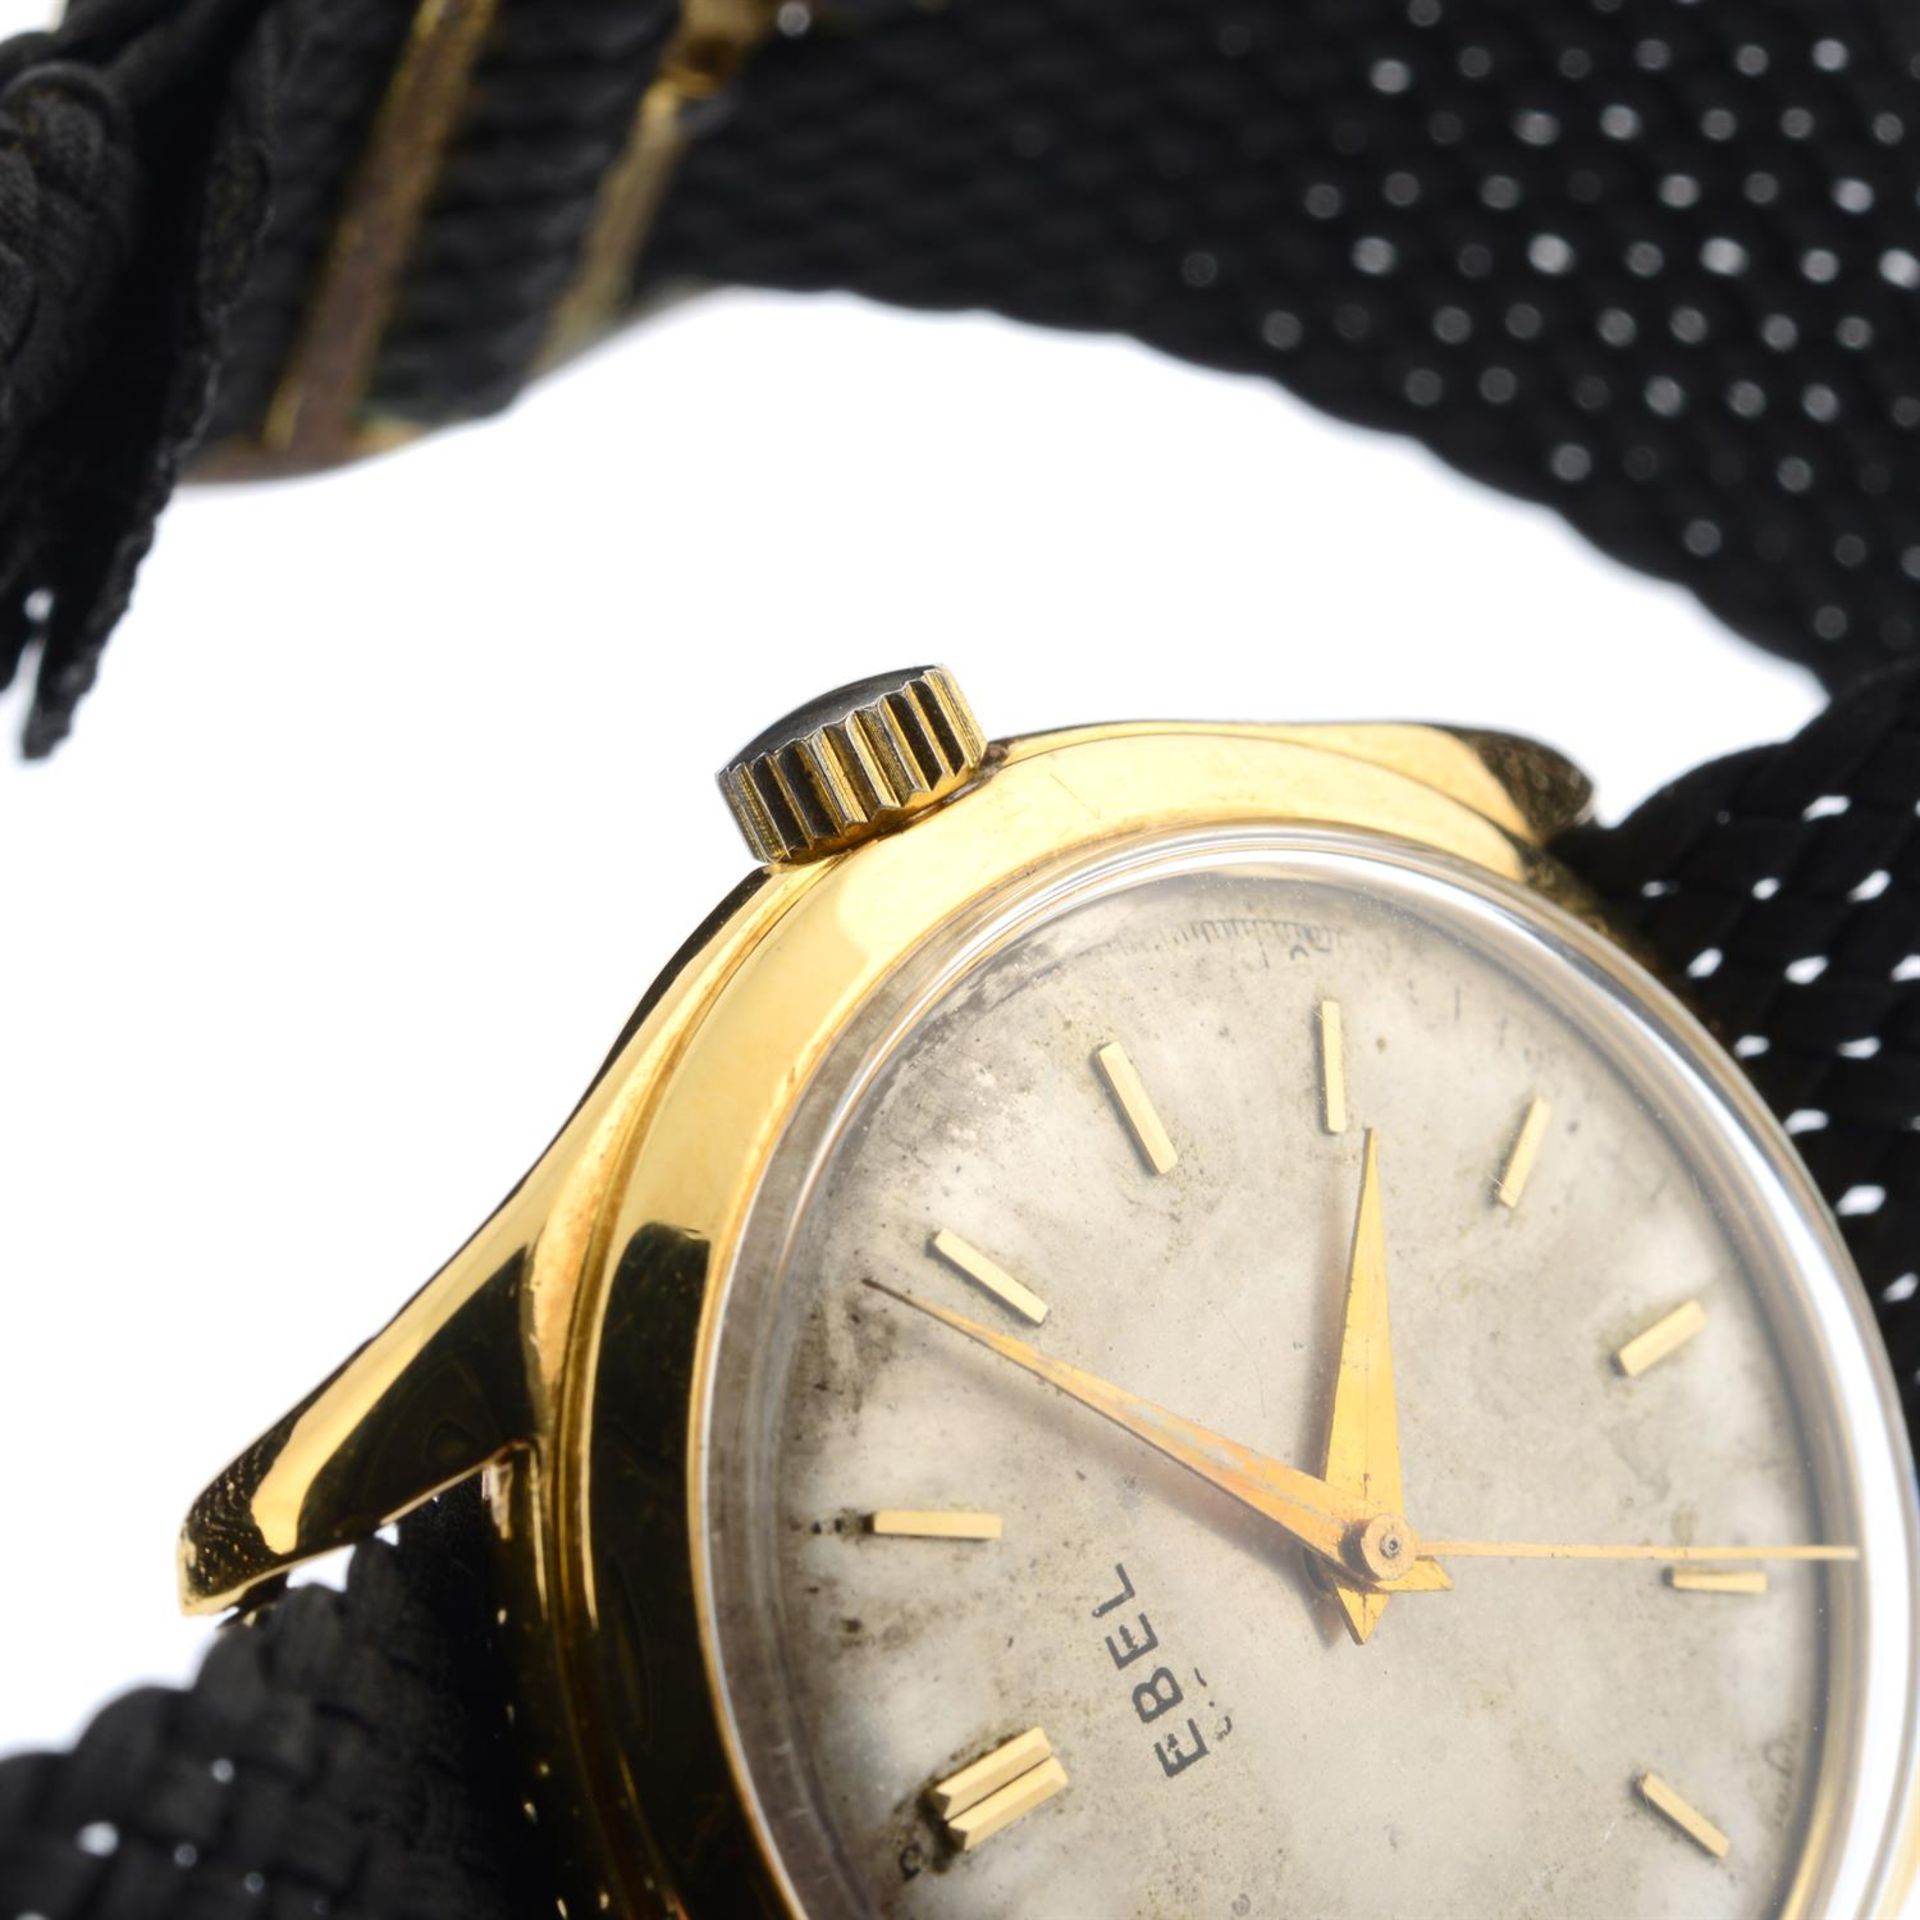 EBEL - a yellow metal wrist watch, 33mm. - Image 4 of 6